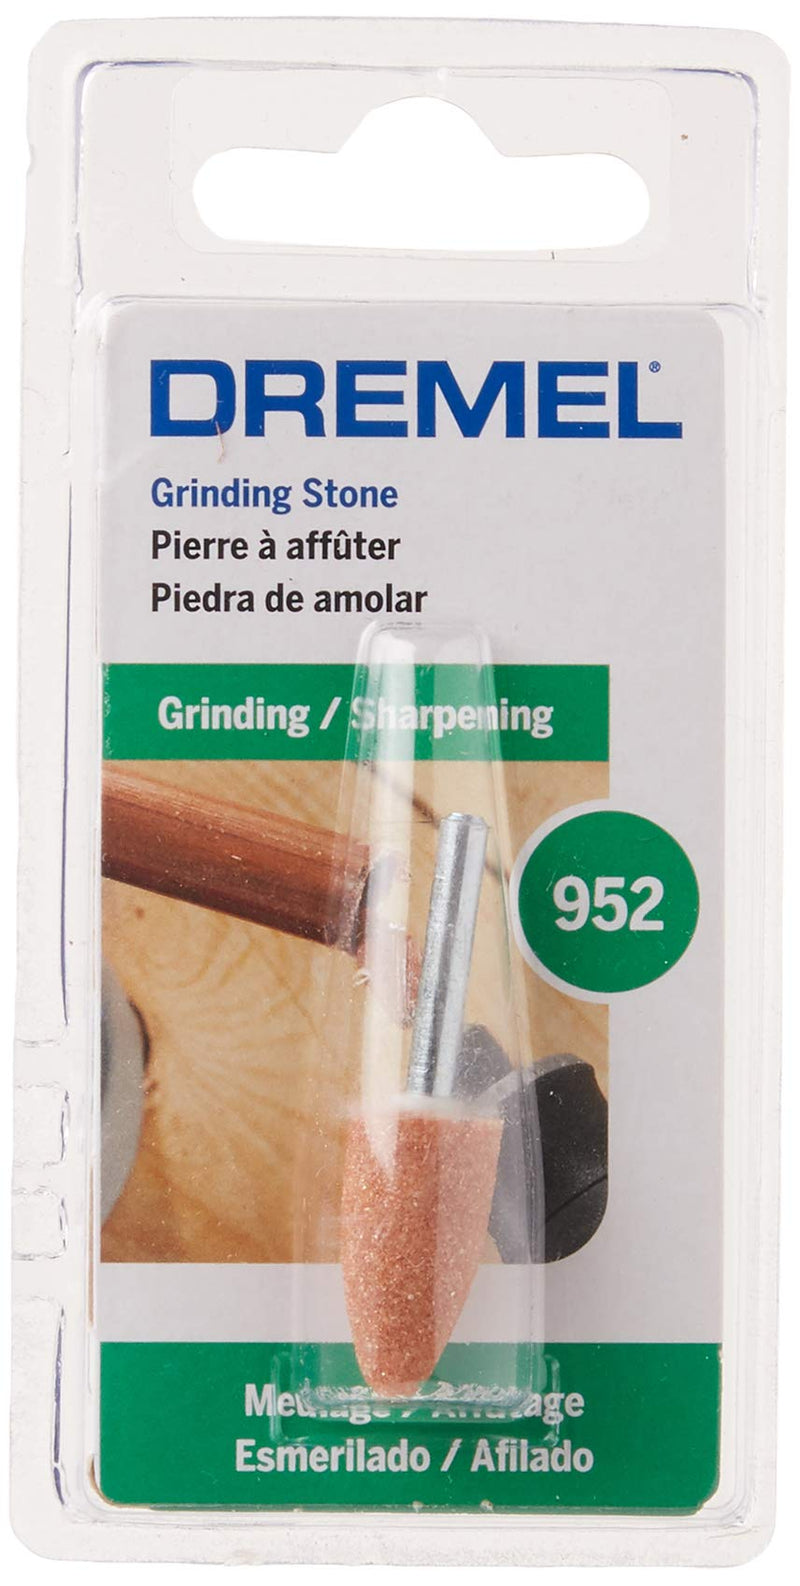 Dremel 952 Aluminum Oxide Grinding Stone, 3/8" (9.5mm), Sharpening & Grinding Rotary Tool Accessory (1 Piece) - NewNest Australia